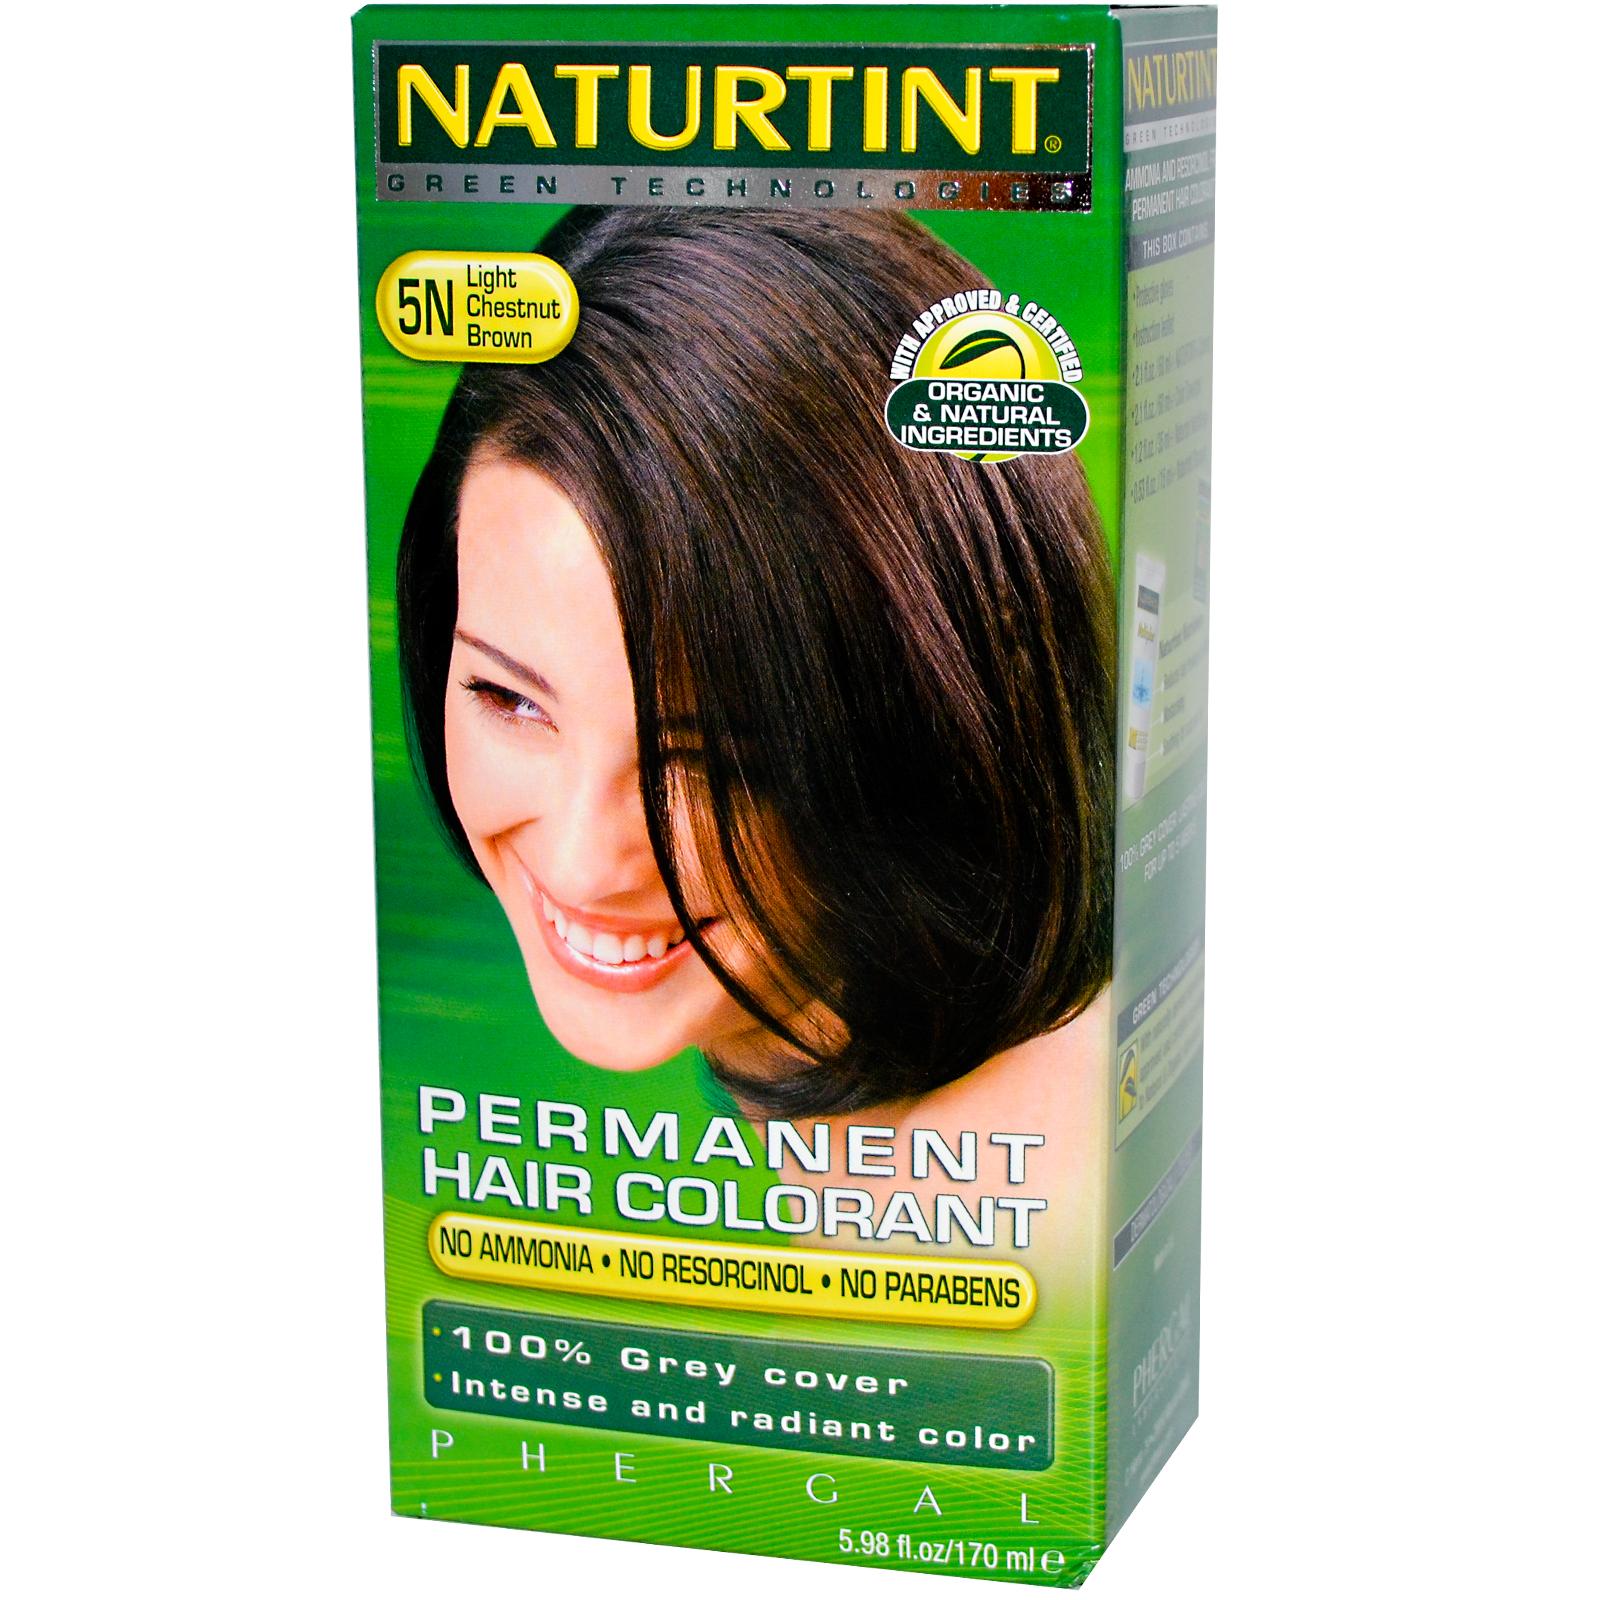 Naturtint 5n Light Chestnut Hair Color (1xKit)